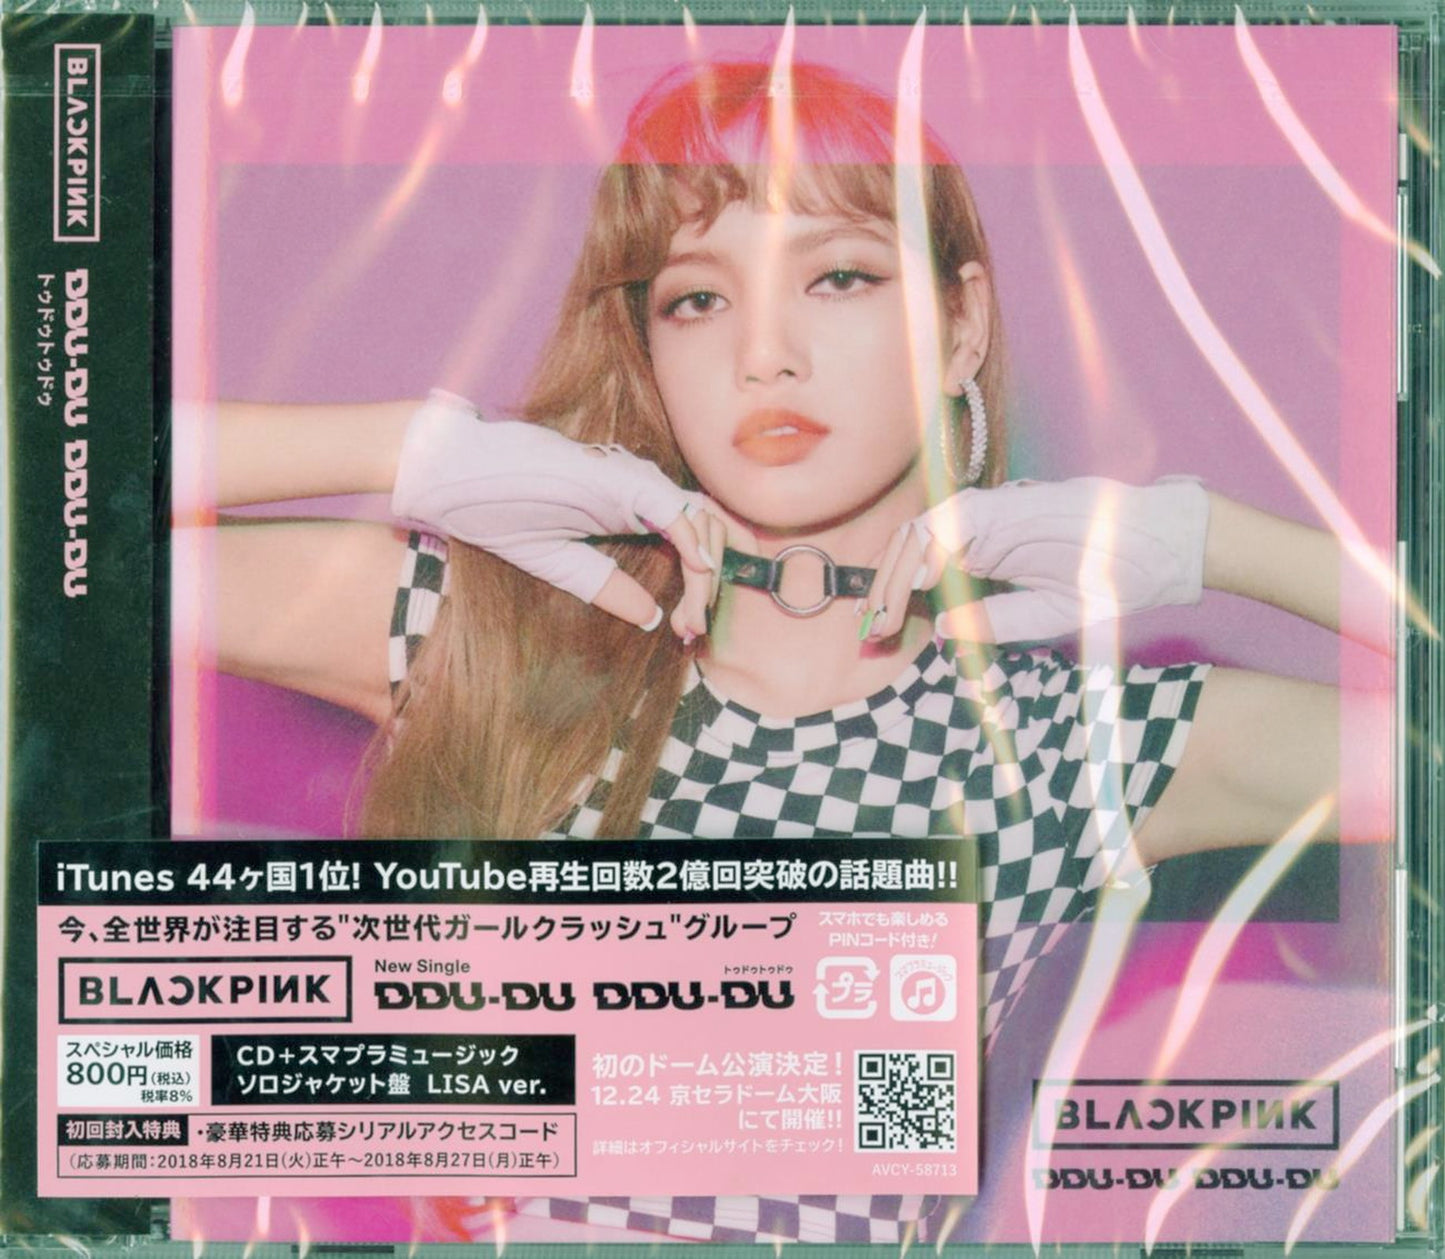 Blackpink - DDU-DU DDU-DU (Lisa Ver.) - Japan  CD